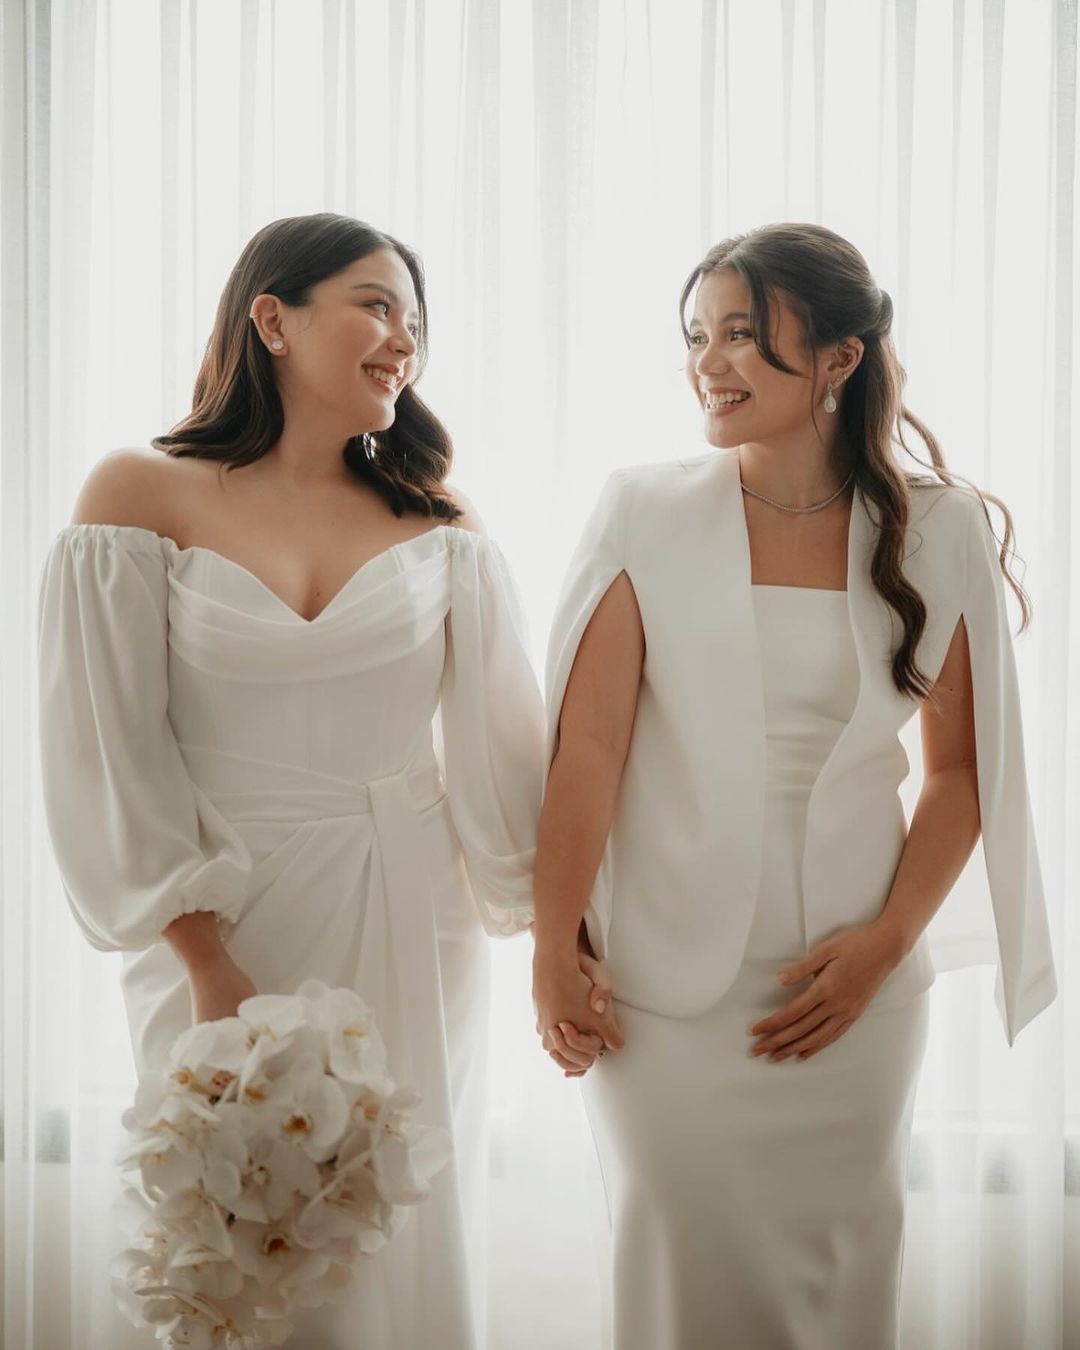 Ria Atayde at her civil wedding with her sister Gela Atayde